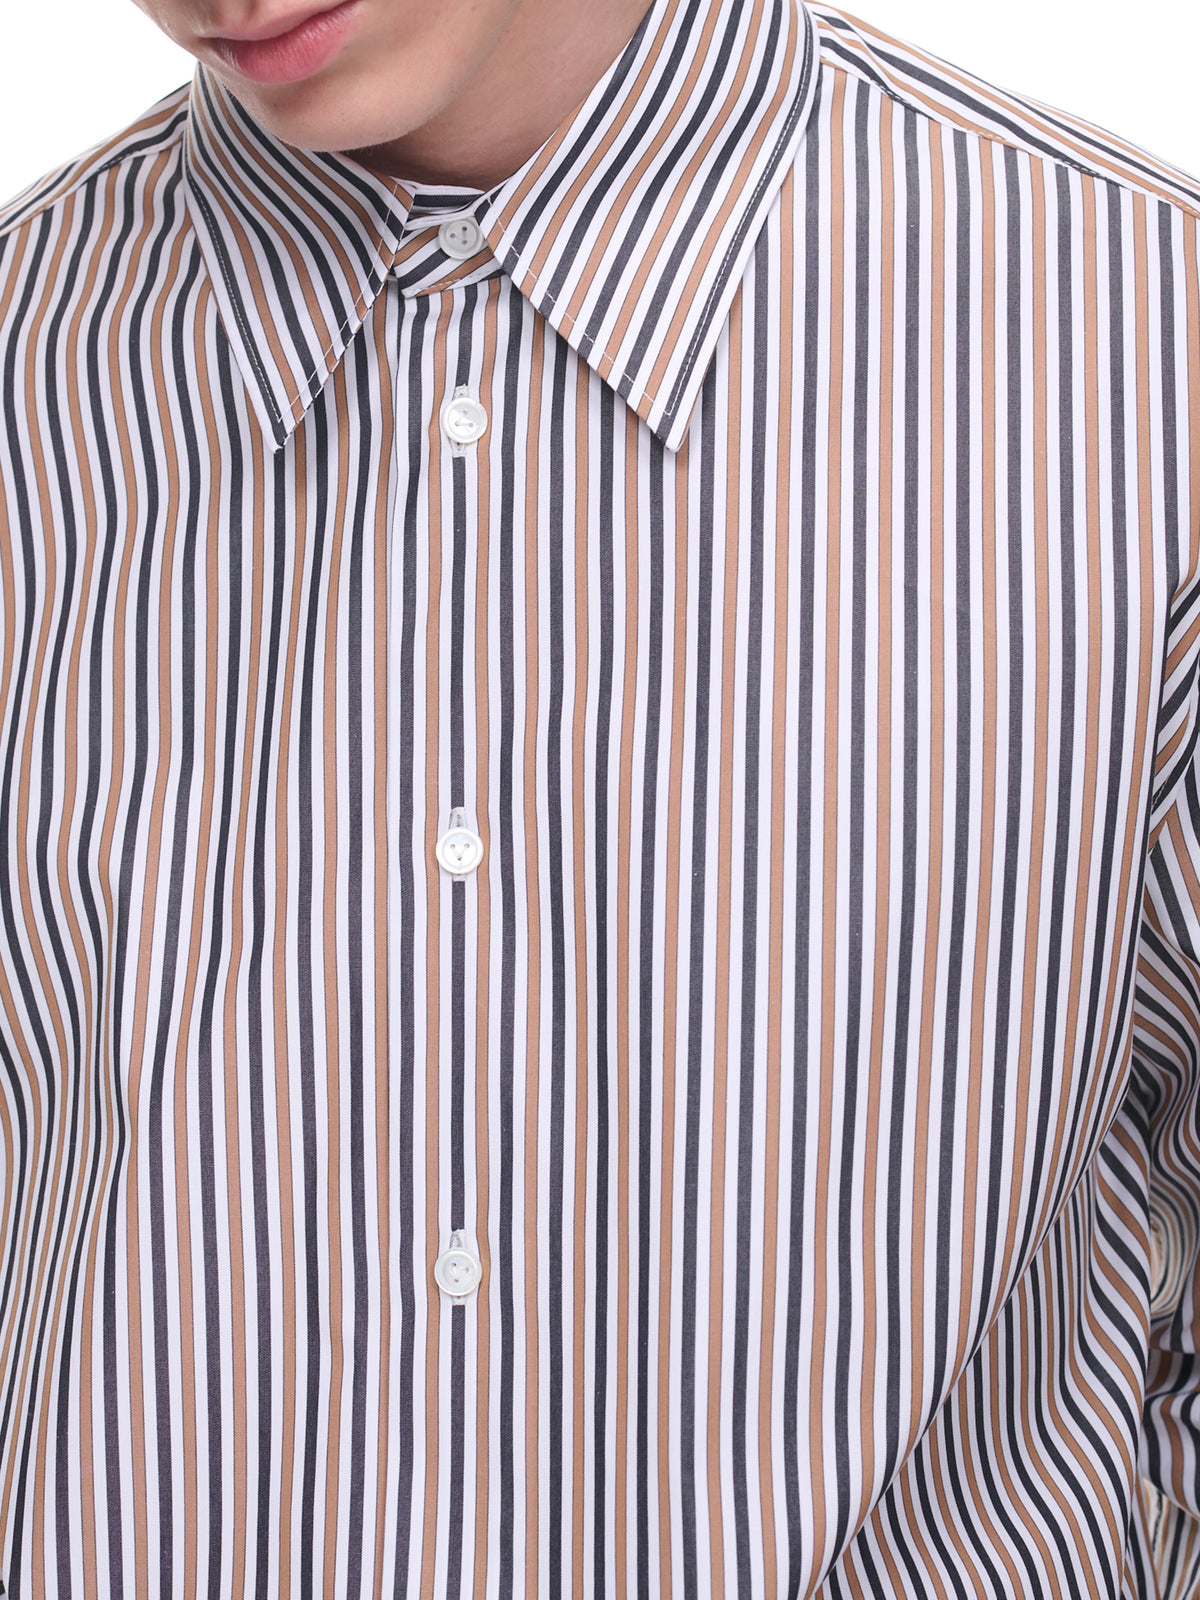 BOTTEGA VENETA Striped Shirt | H. Lorenzo - detail 2